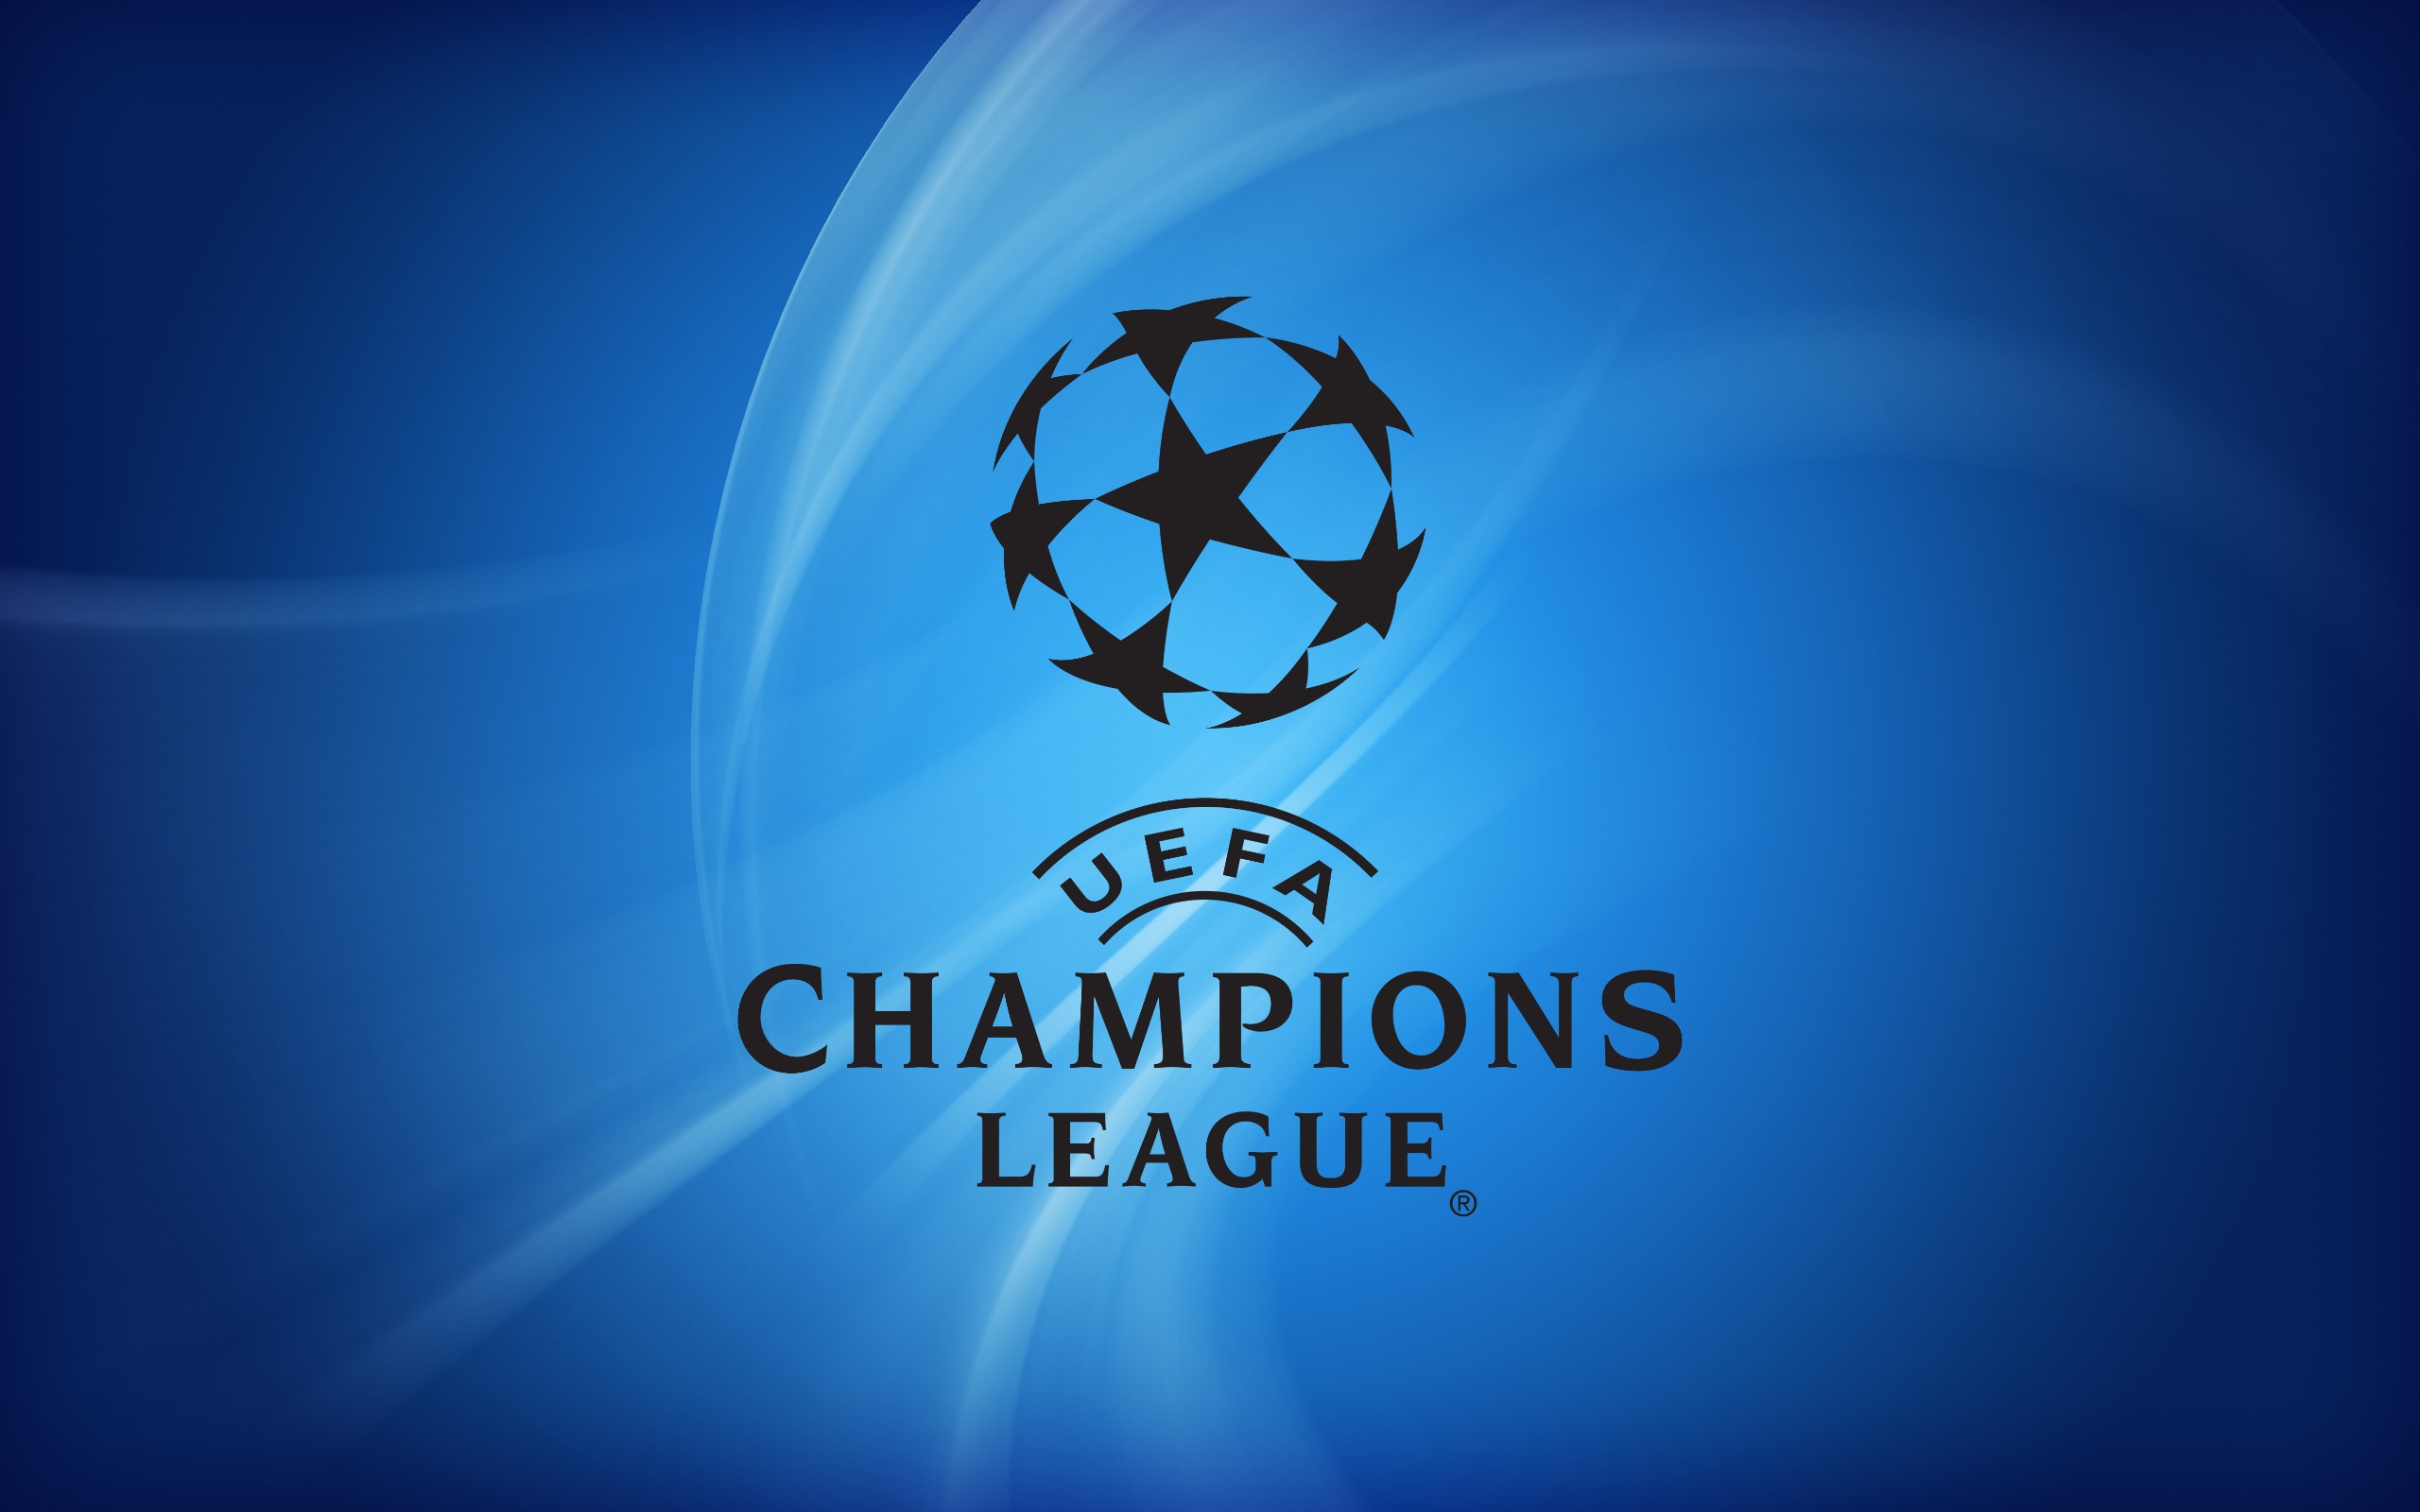 Champions league matches. Лига чемпионов. Лига чемпионов УЕФА логотип. Флаг Лиги чемпионов. Лига чемпионов картинки на рабочий стол.